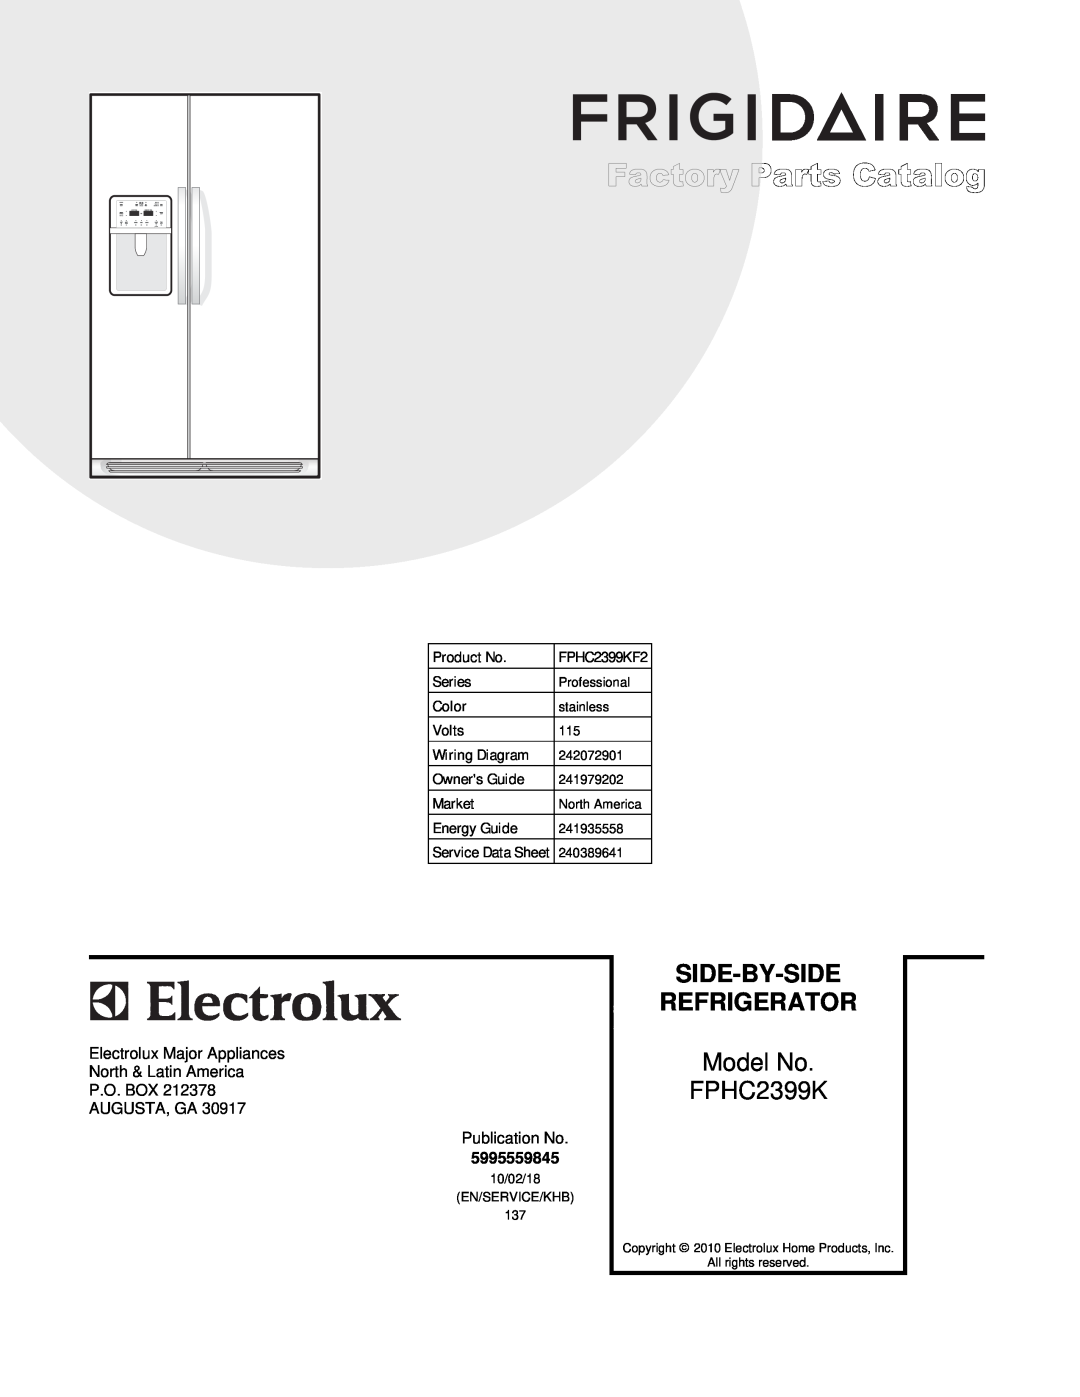 Frigidaire FPHC2339K manual Model No, Side-By-Side, Refrigerator, FPHC2399K 